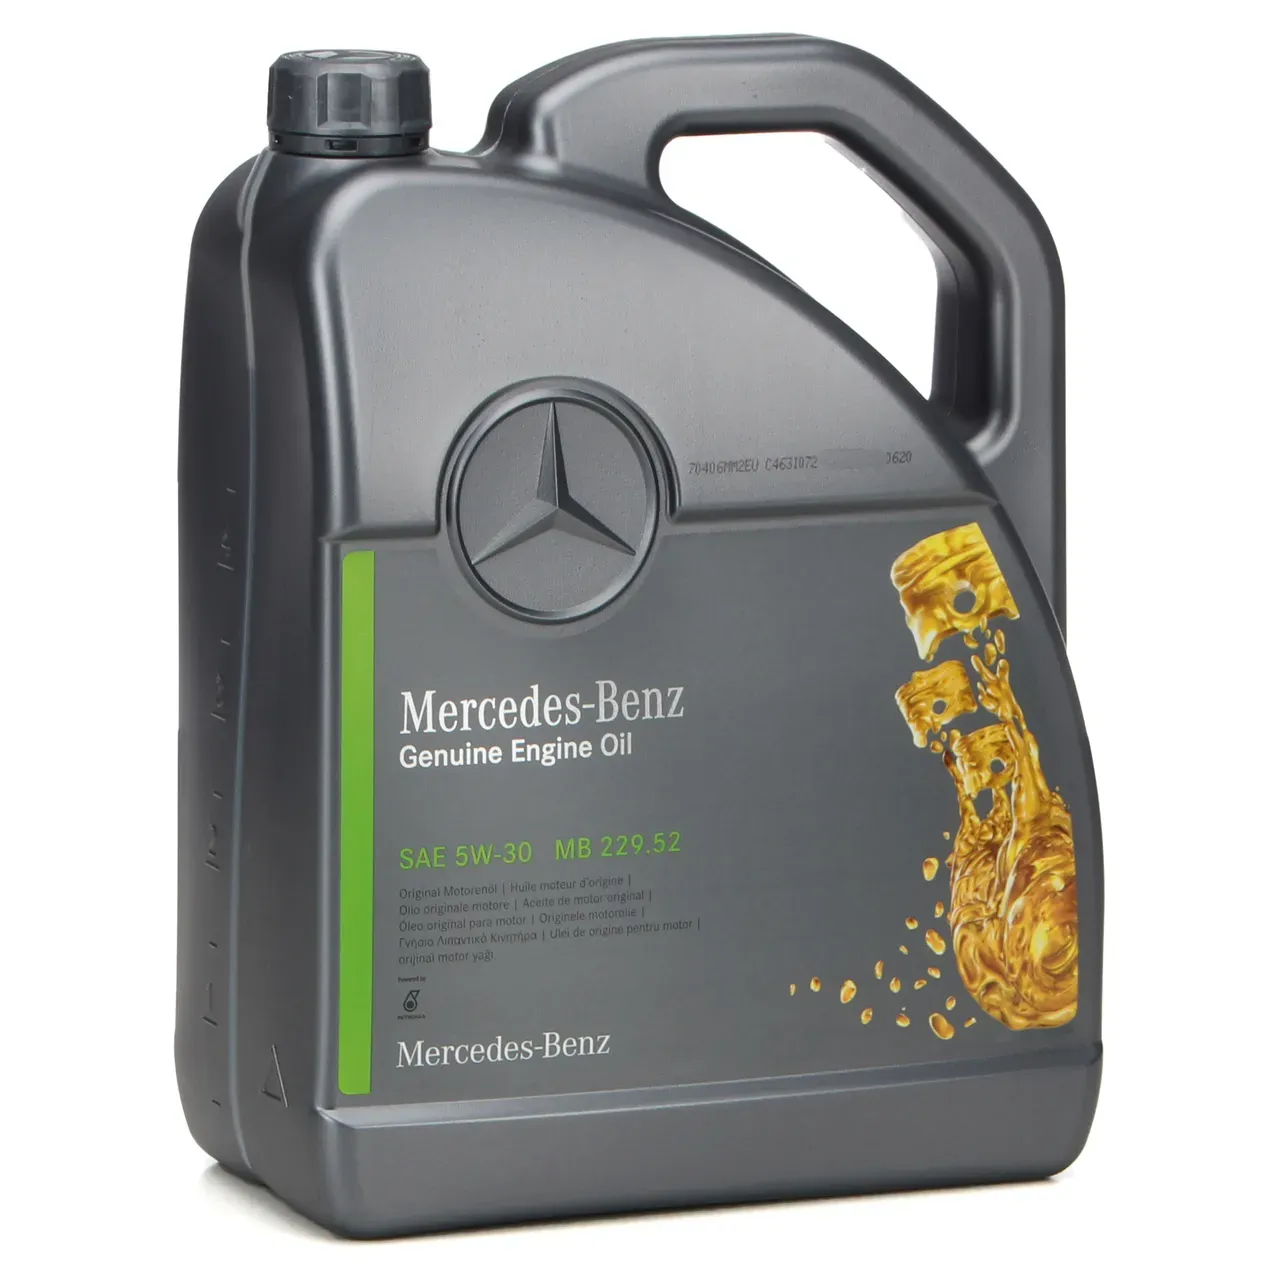 Origineel Motorolie Mercedes 5W30 229.52 5L